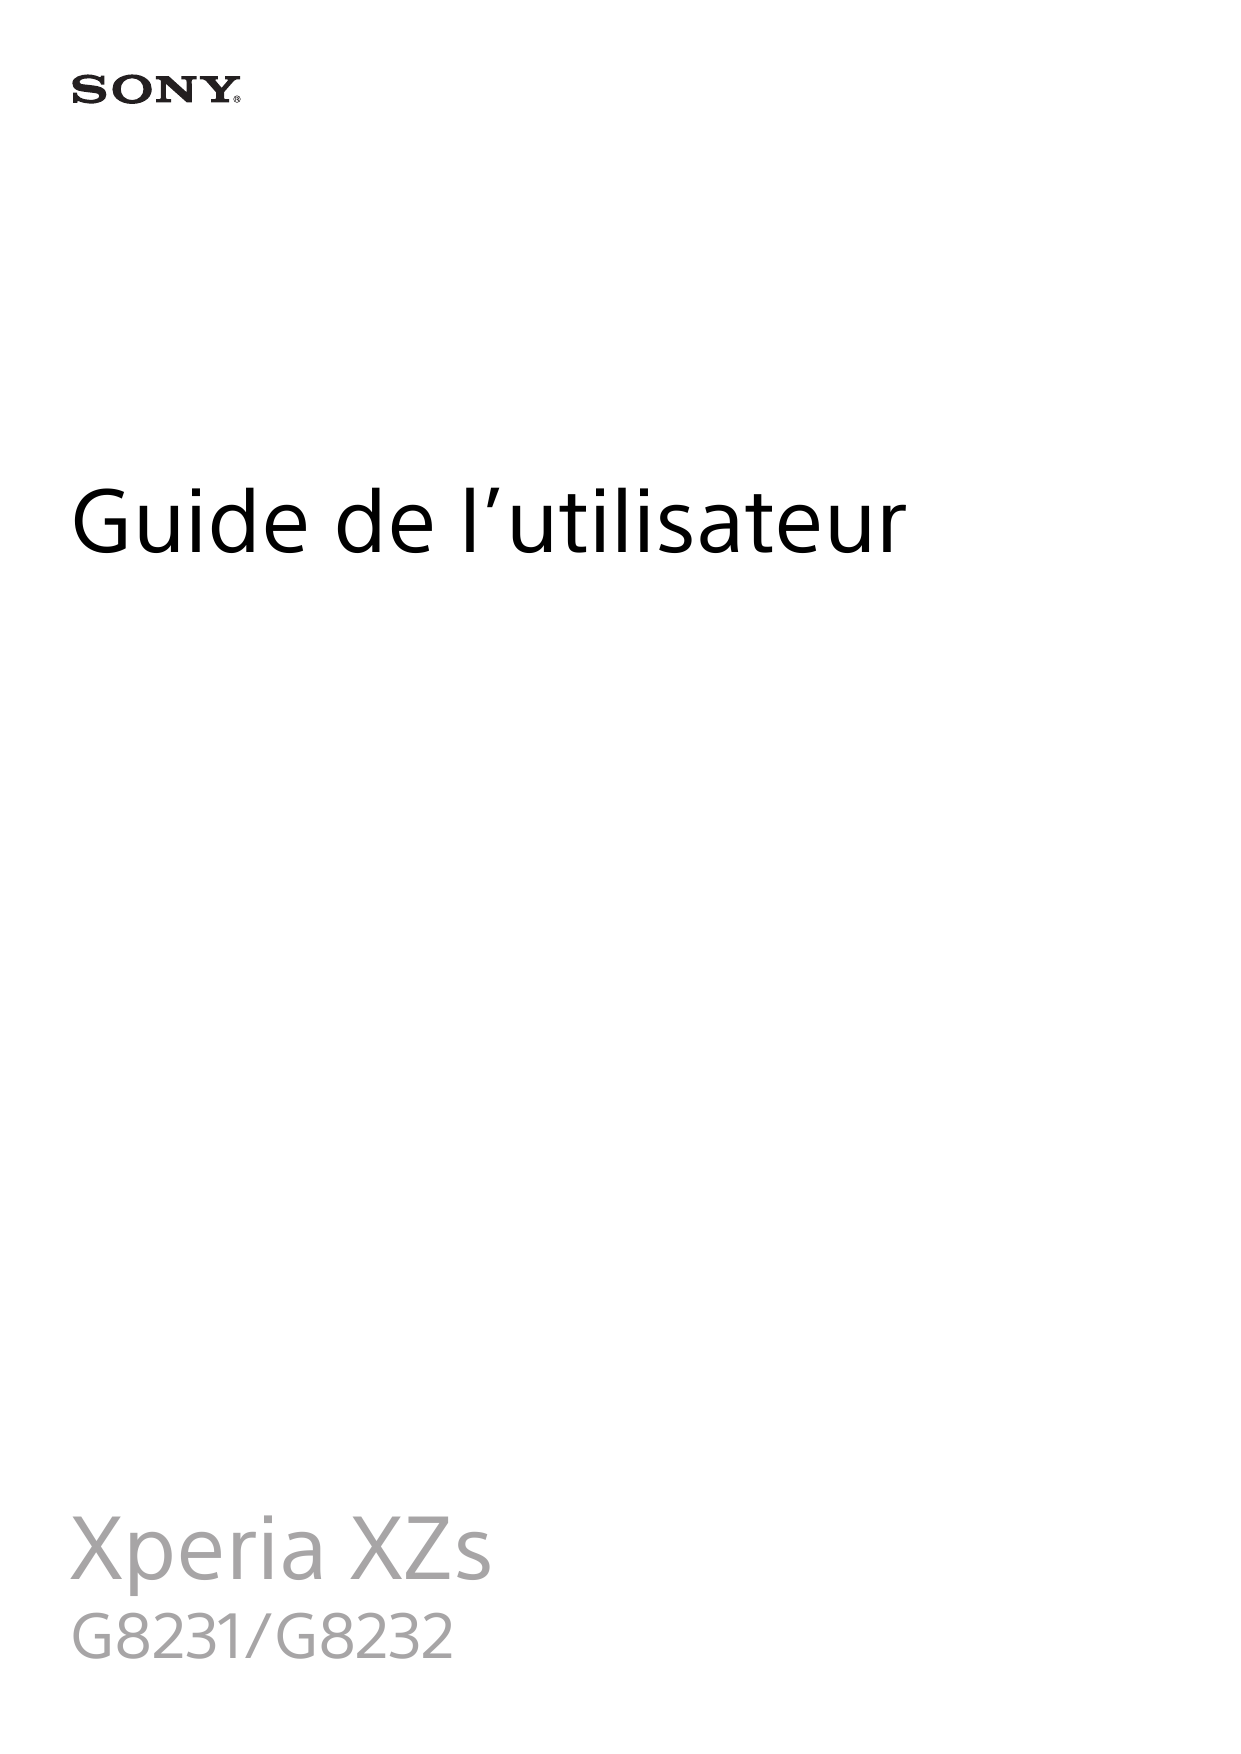 Guide de l’utilisateurXperia XZsG8231/G8232